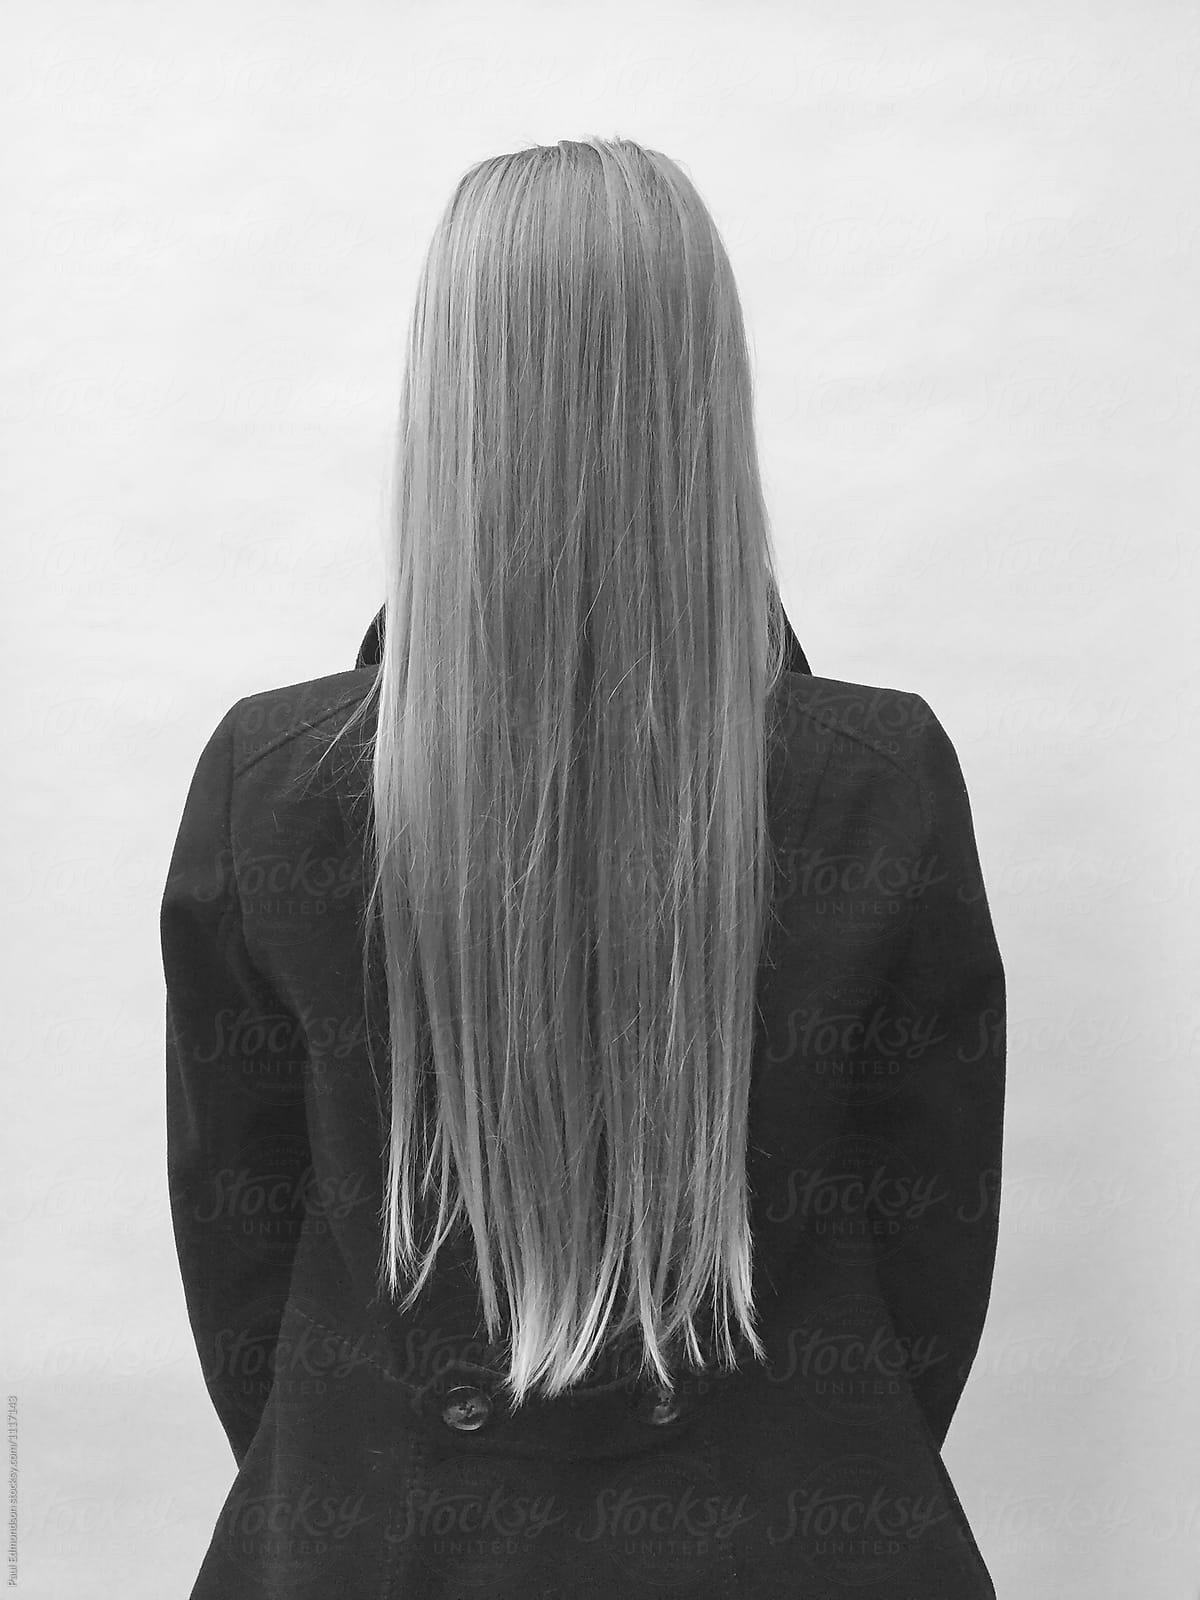 Teenage girl with long, straight hair, facing away